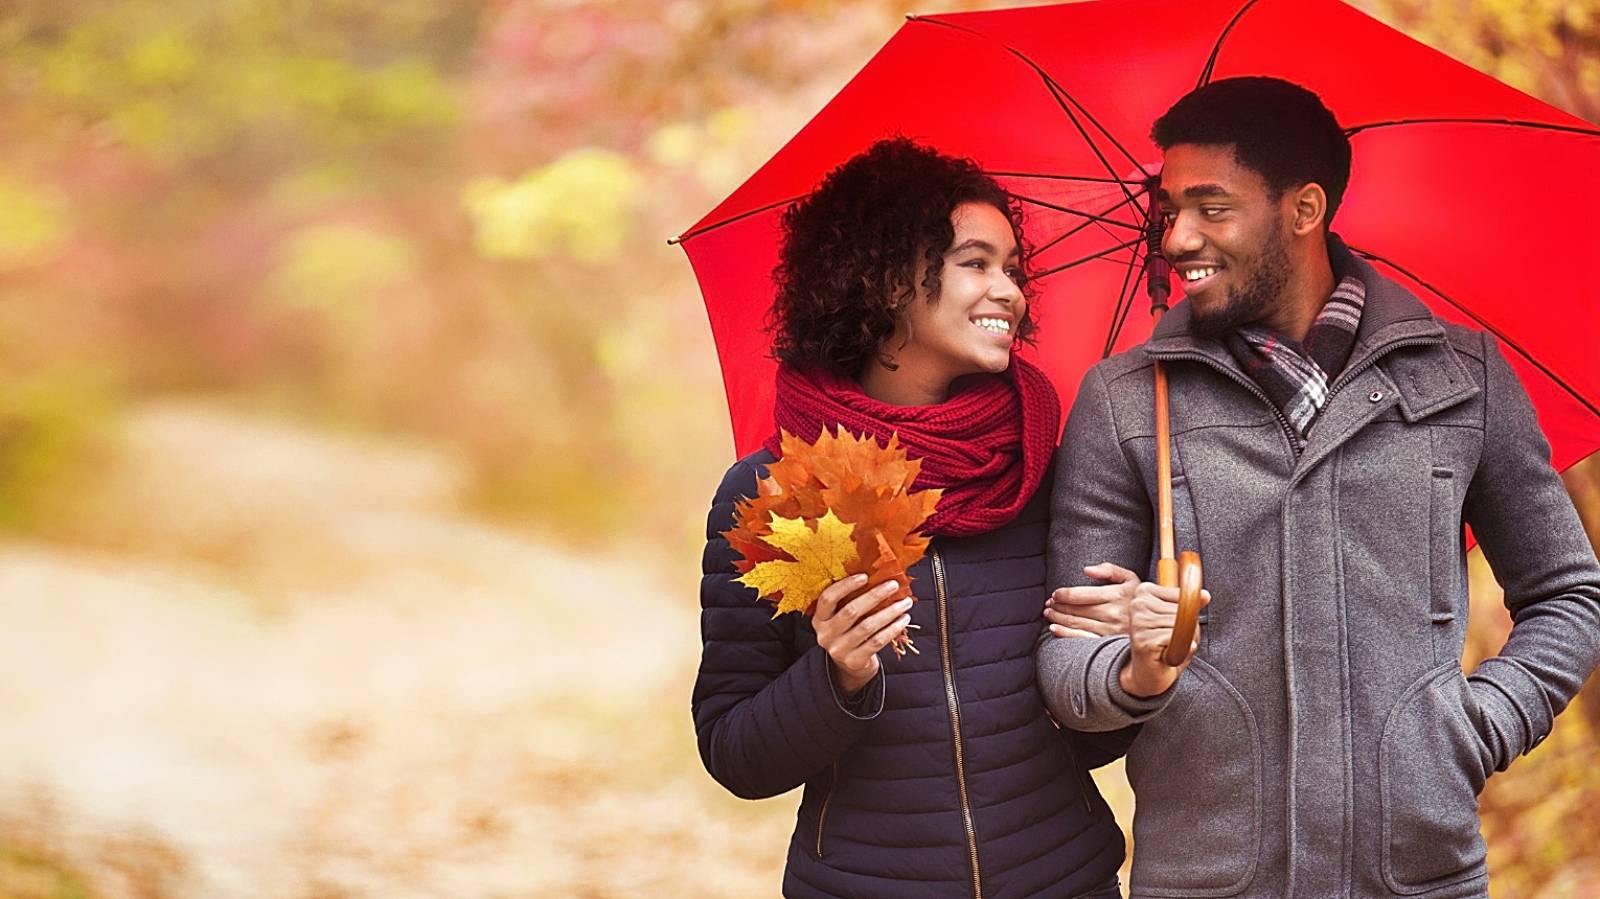 Young couple walking under umbrella at rainy autumn day - stock photo
